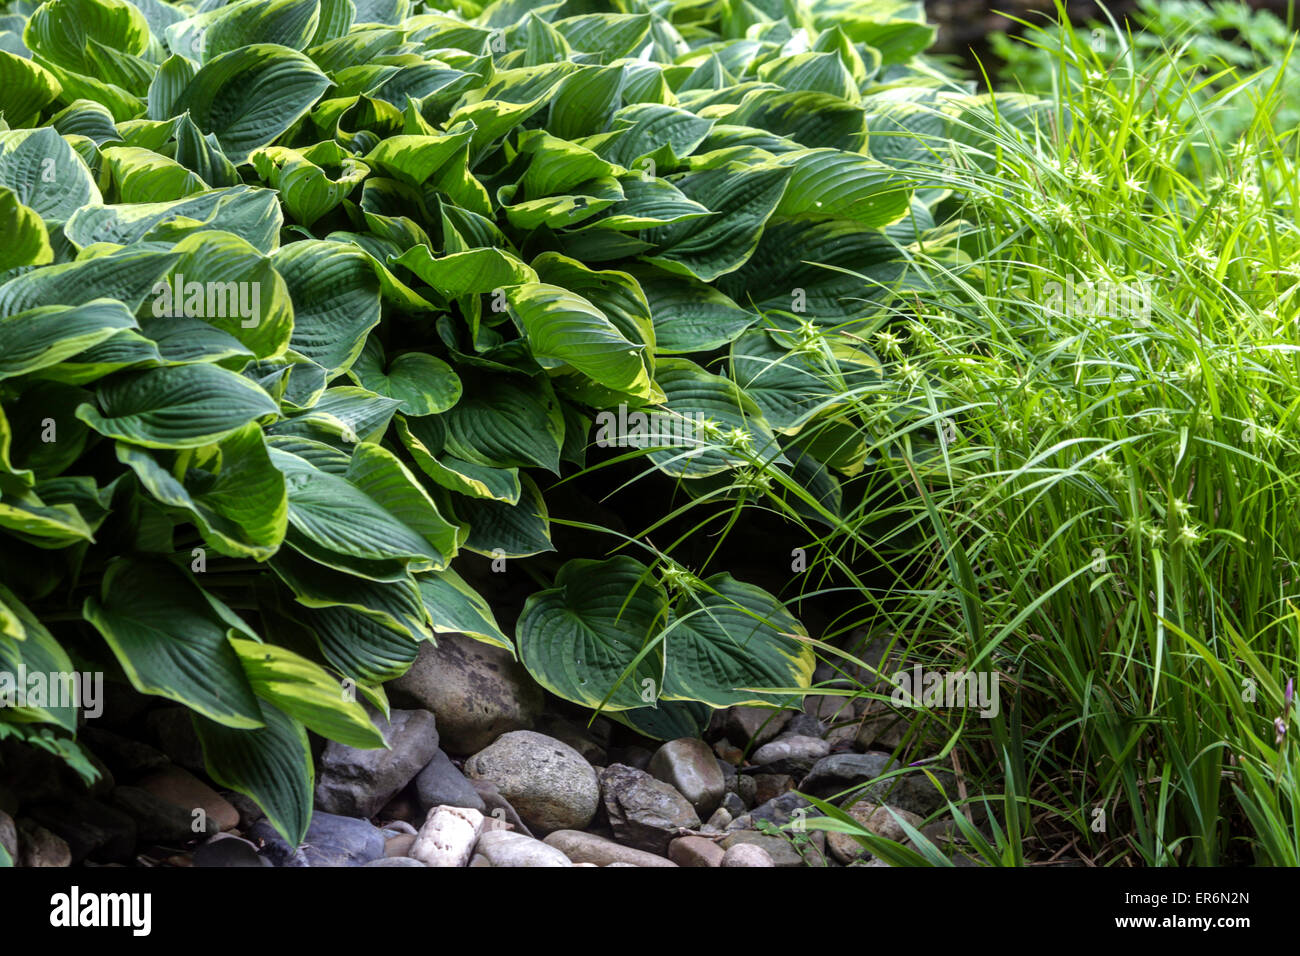 Planta con follaje decorativo y ornamental: planta perenne Hosta Foto de stock